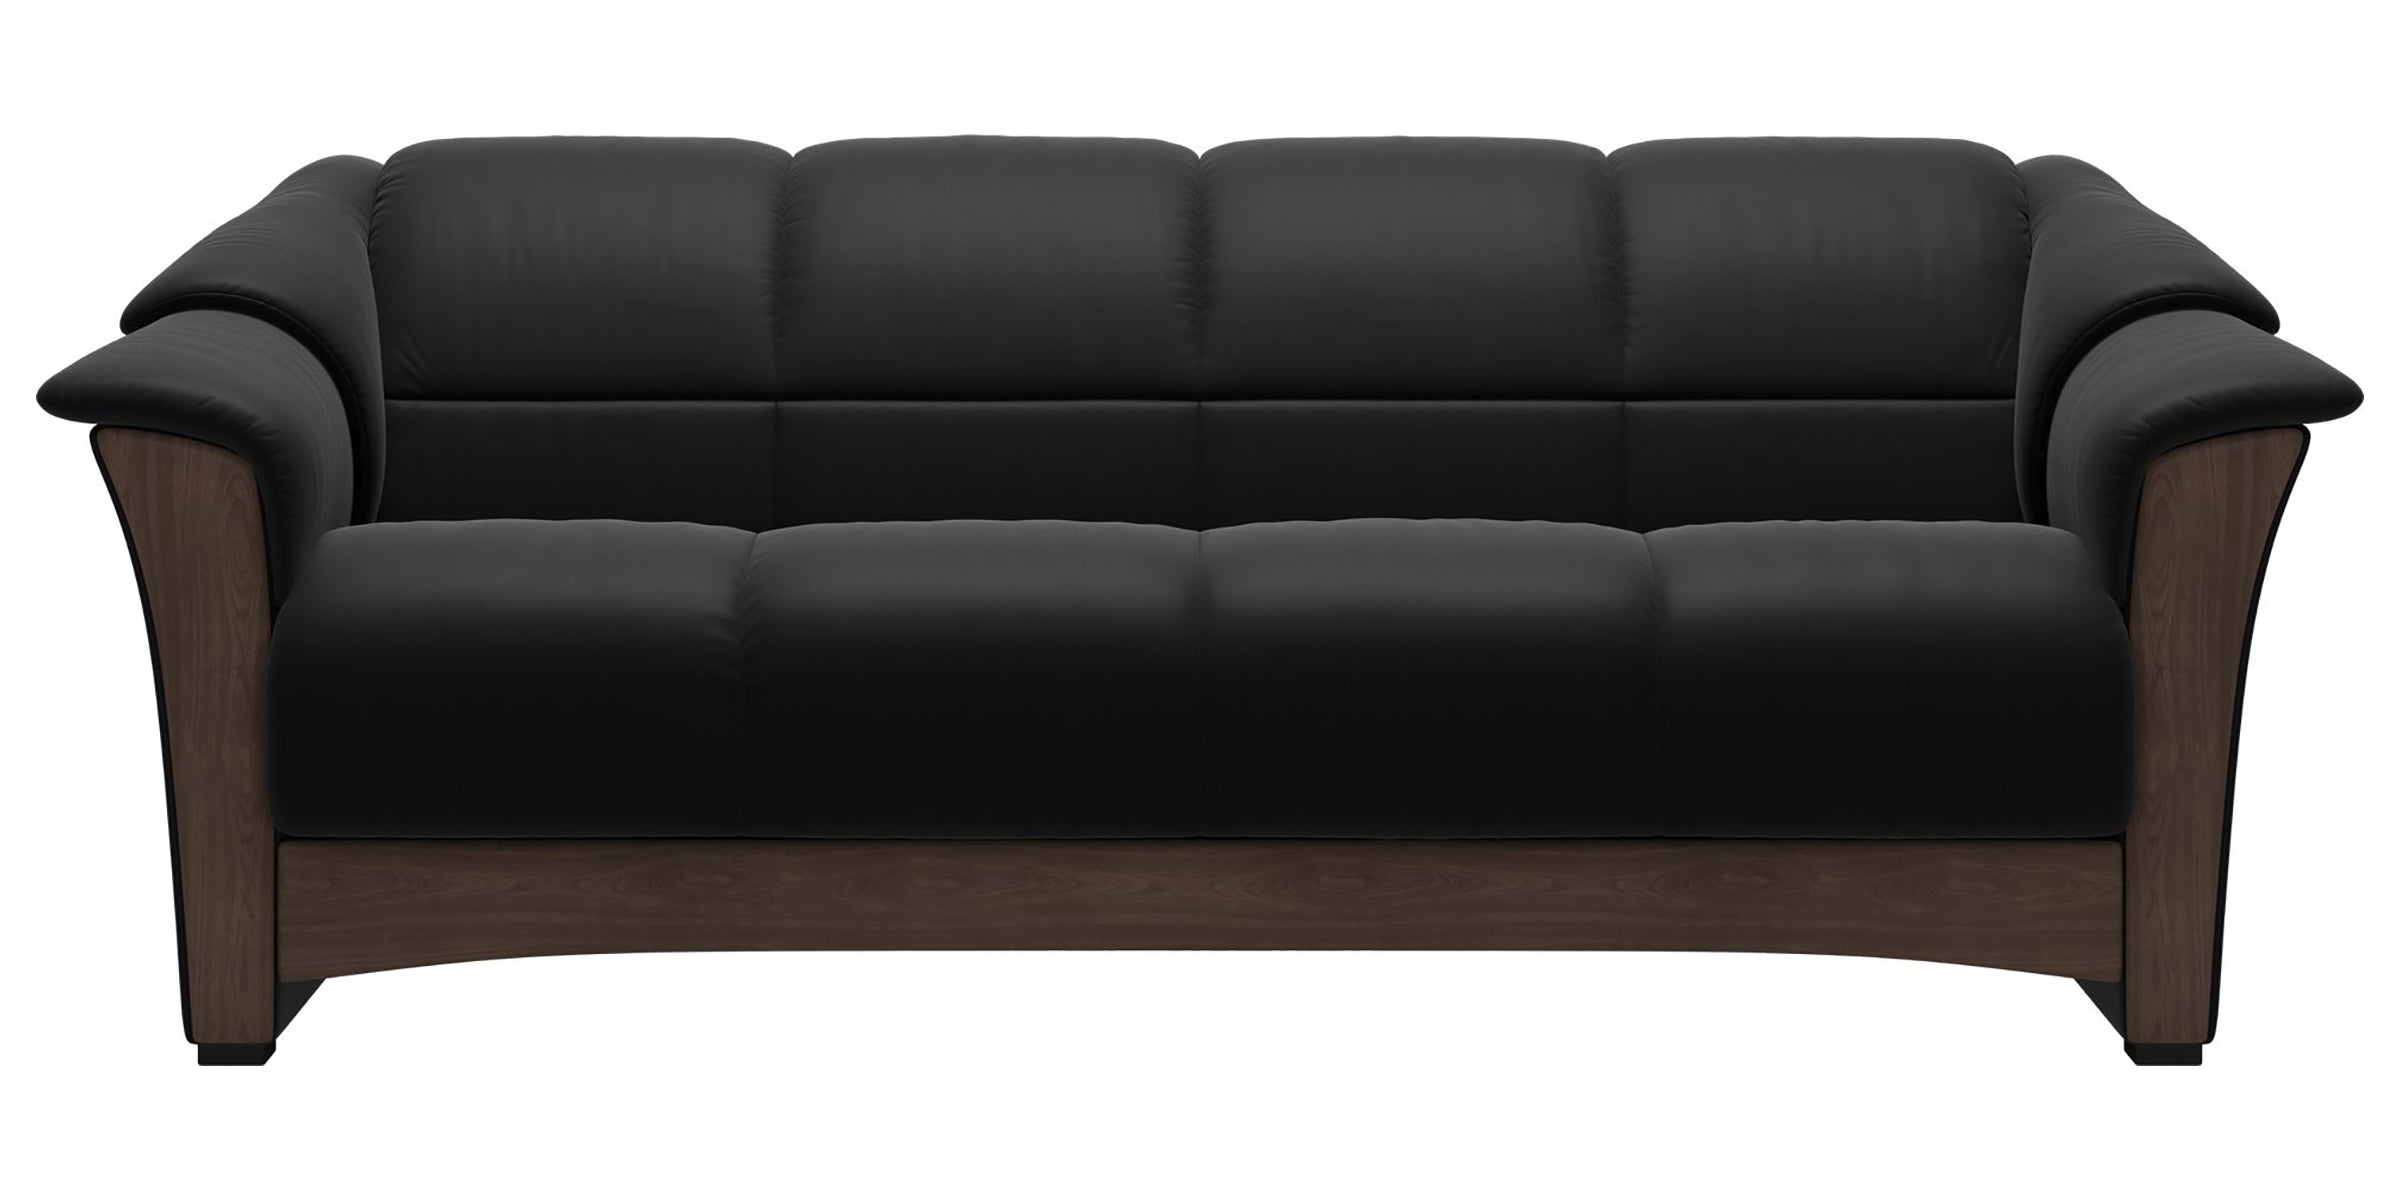 Paloma Leather Black and Walnut Base | Stressless Oslo Sofa | Valley Ridge Furniture